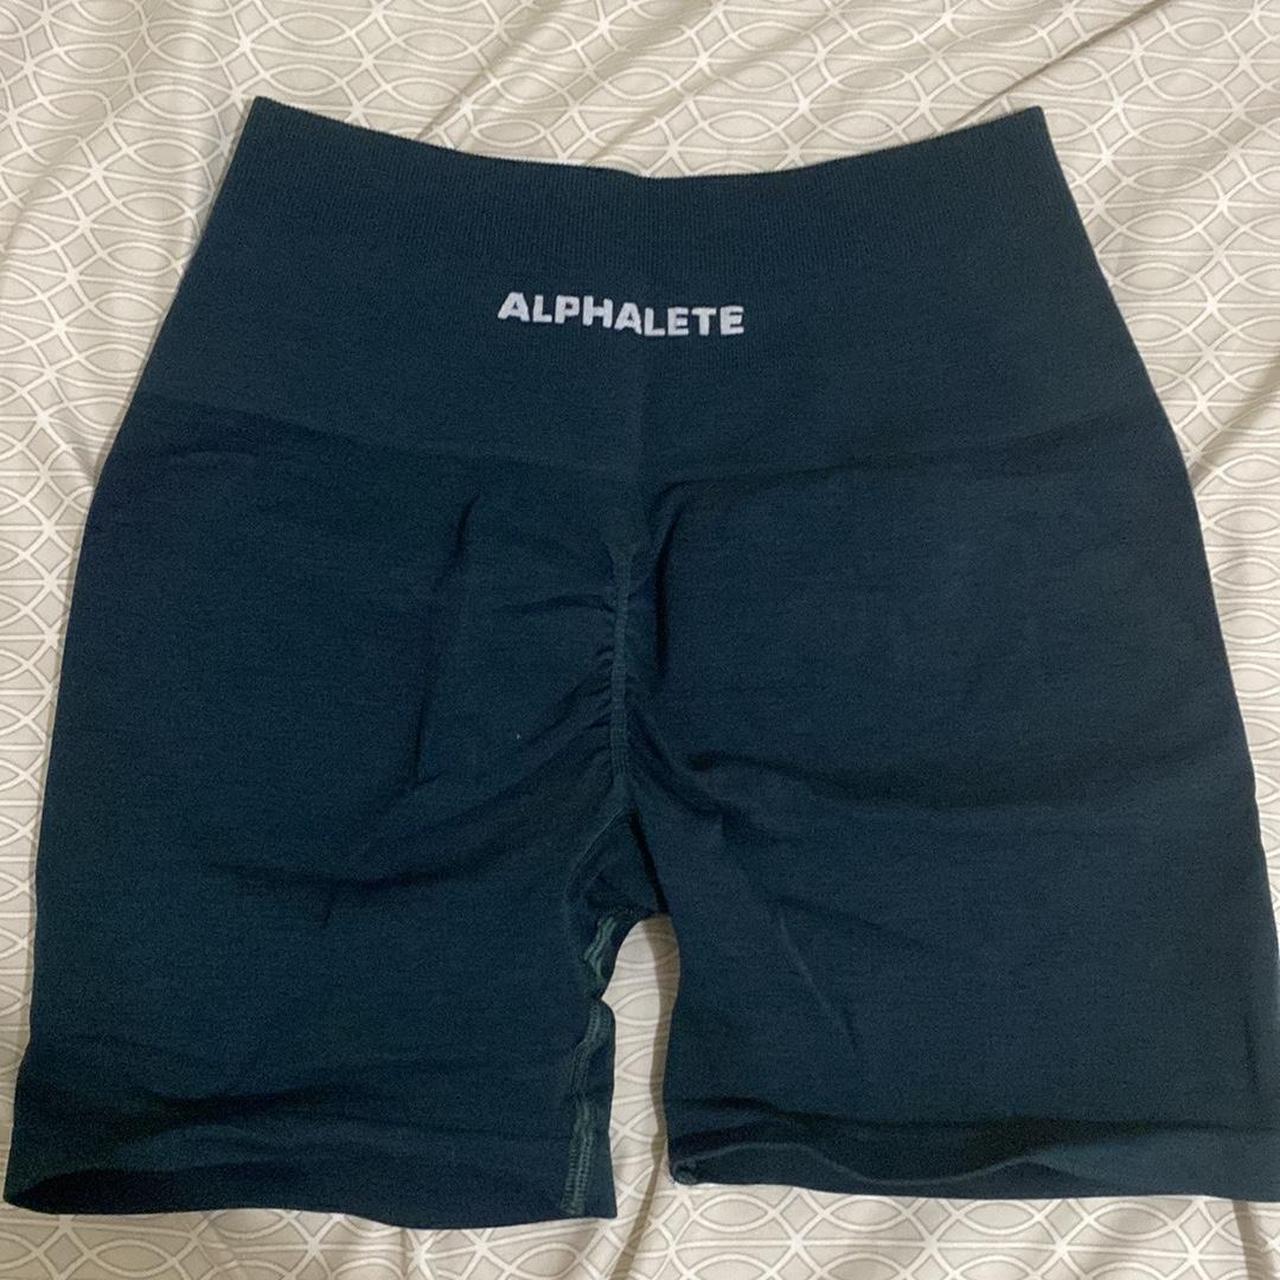 Alphalete Amplify Shorts Color: teal Size small no... - Depop